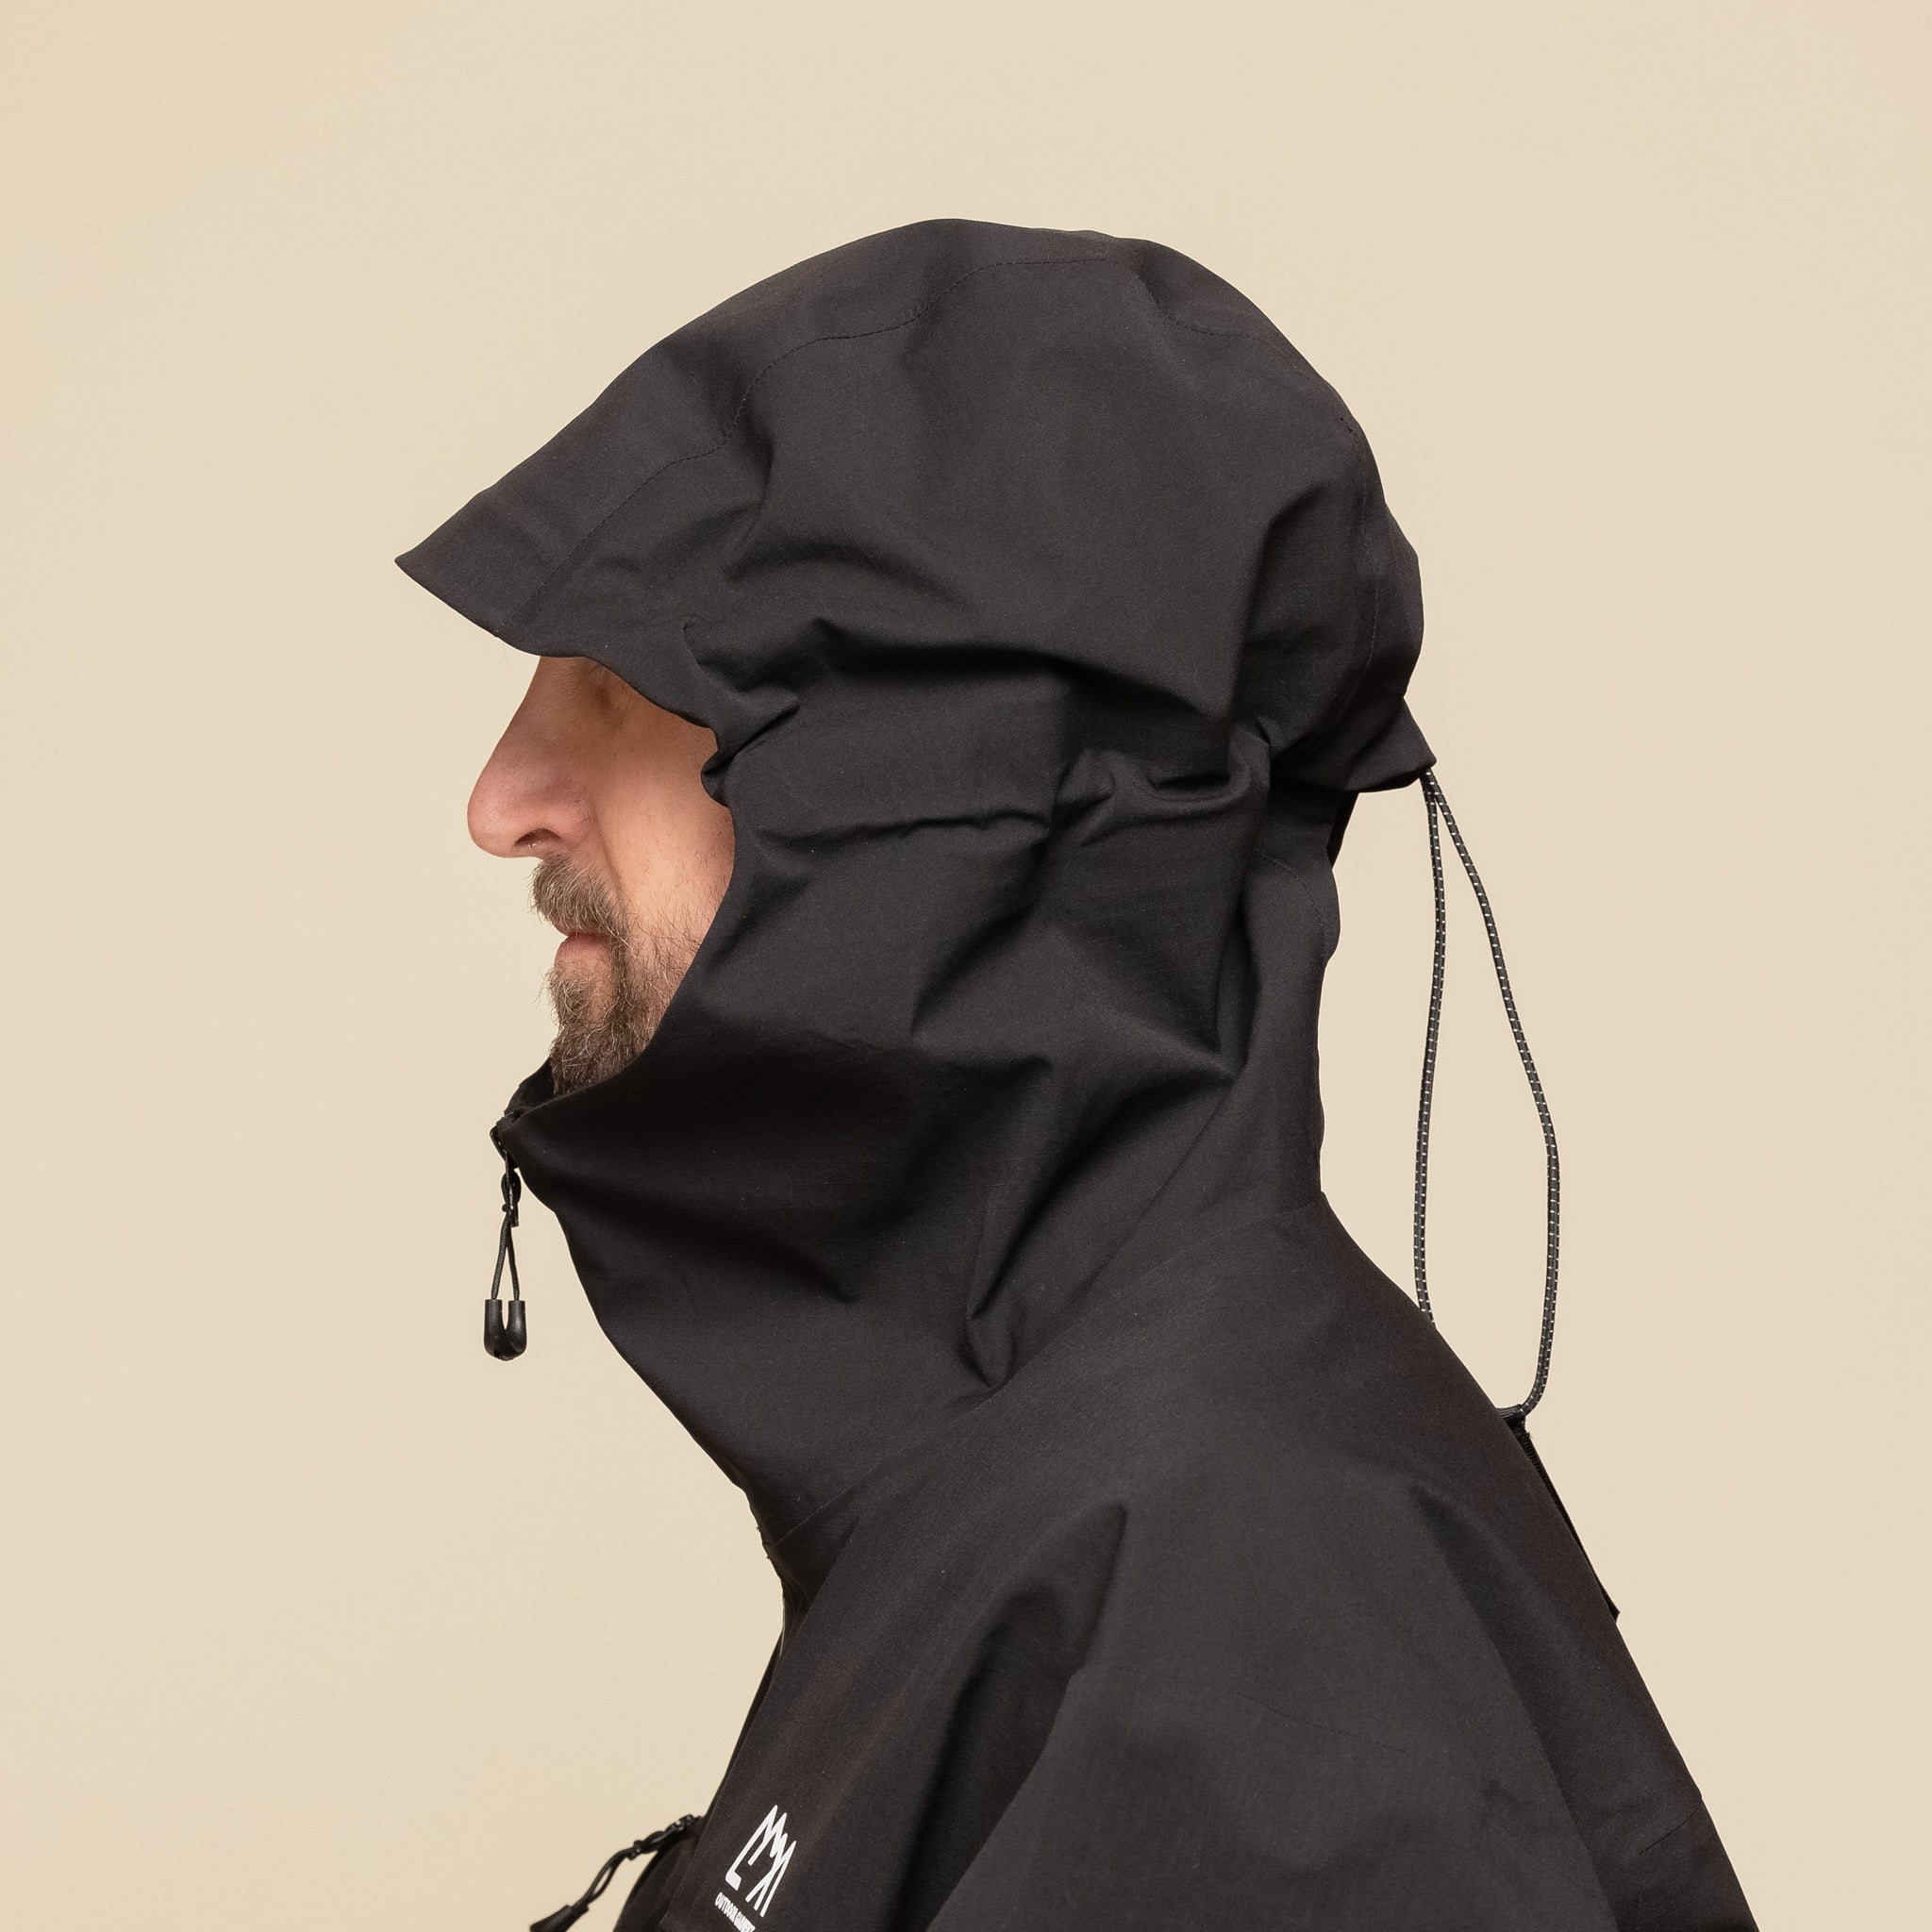 CMF Comfy Outdoor Garment - AR Shell Coexist Jacket - Black